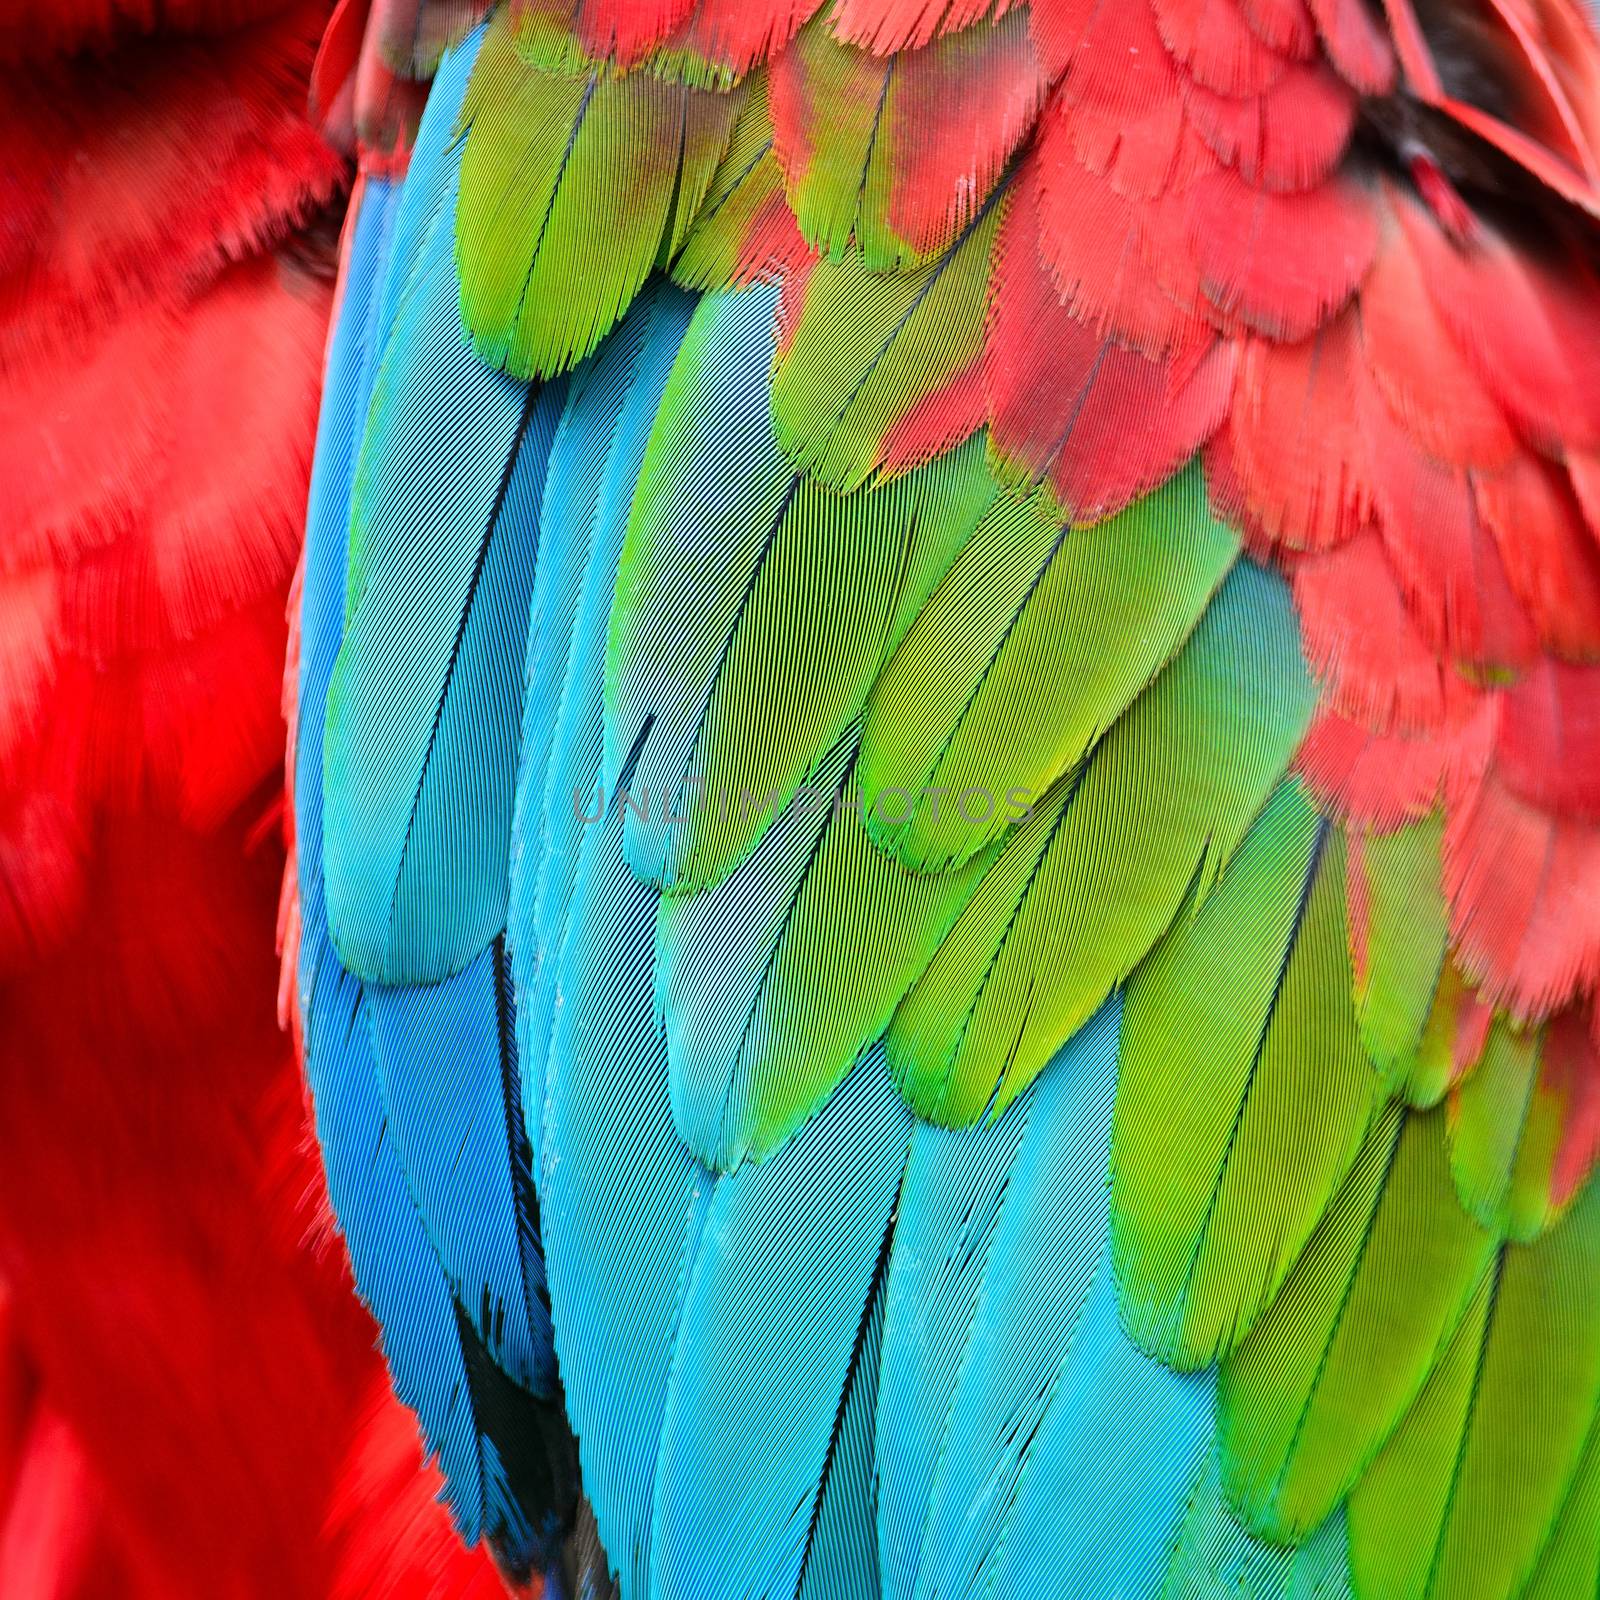 Greenwinged Macaw feathers by panuruangjan